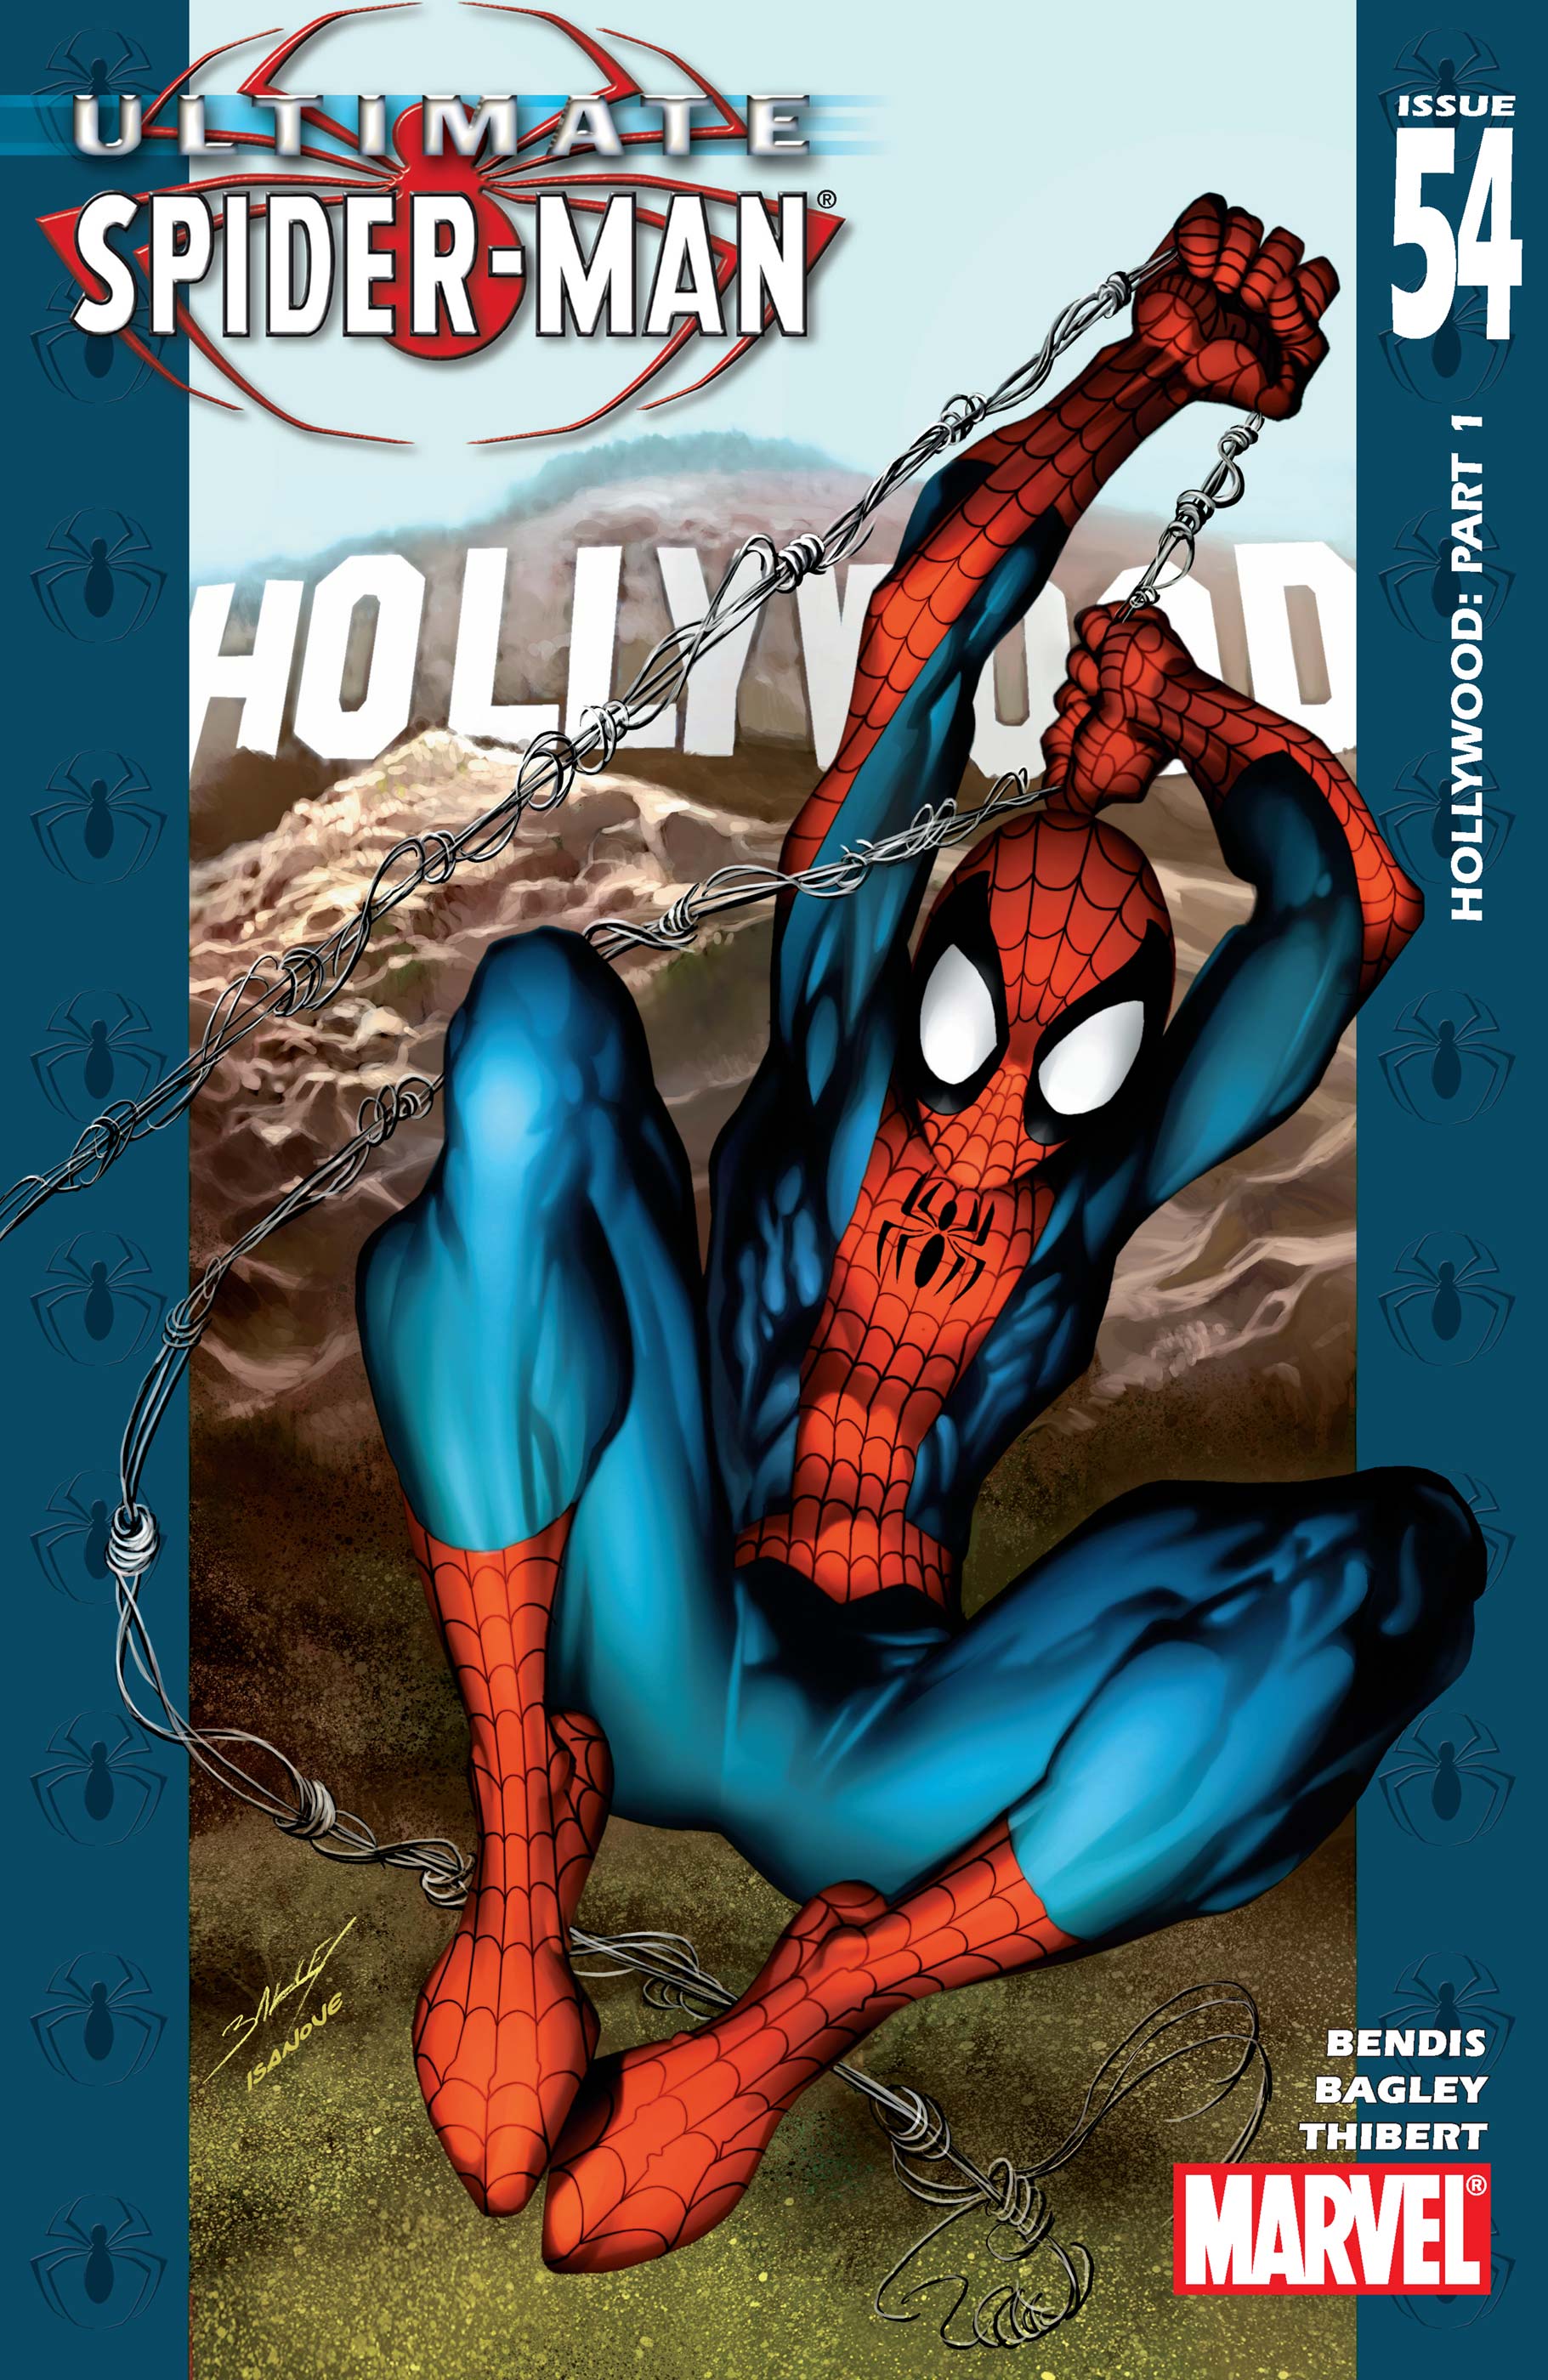 Ultimate Spider-Man Art